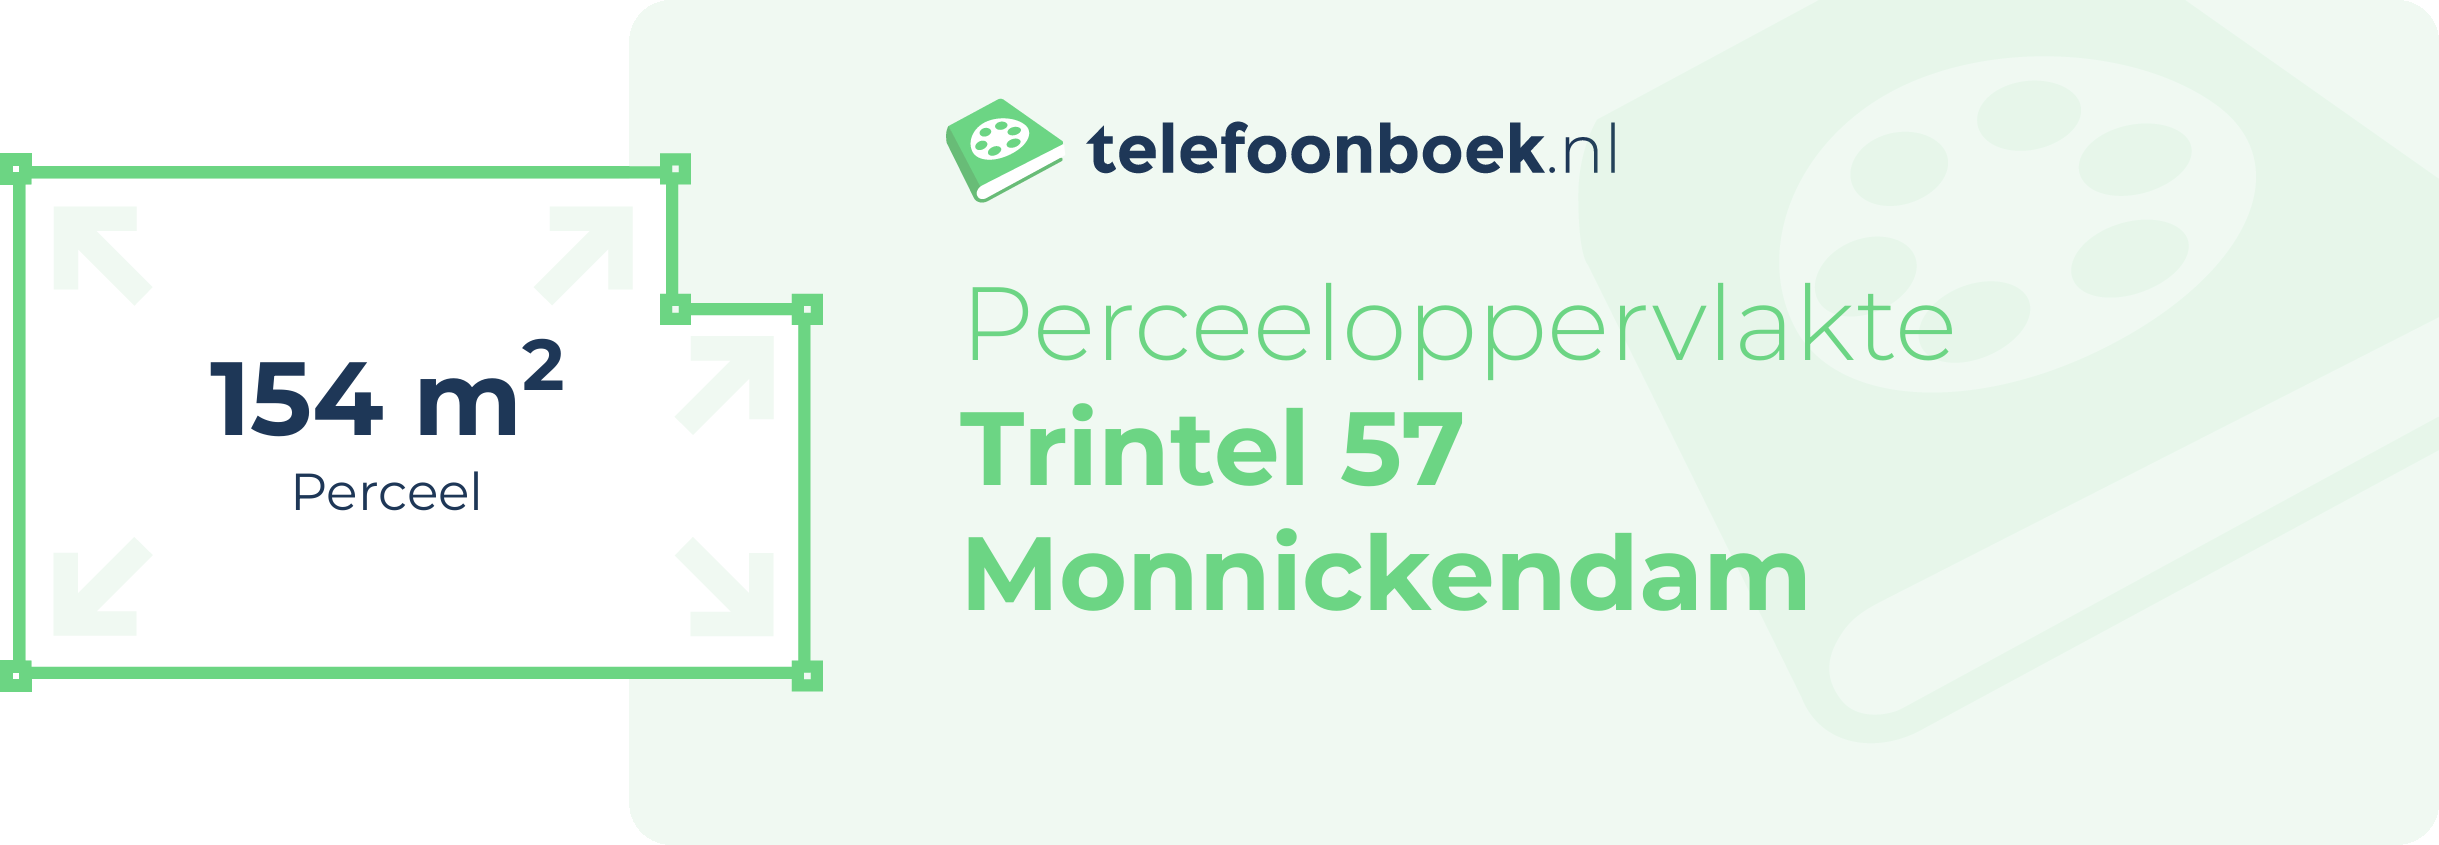 Perceeloppervlakte Trintel 57 Monnickendam